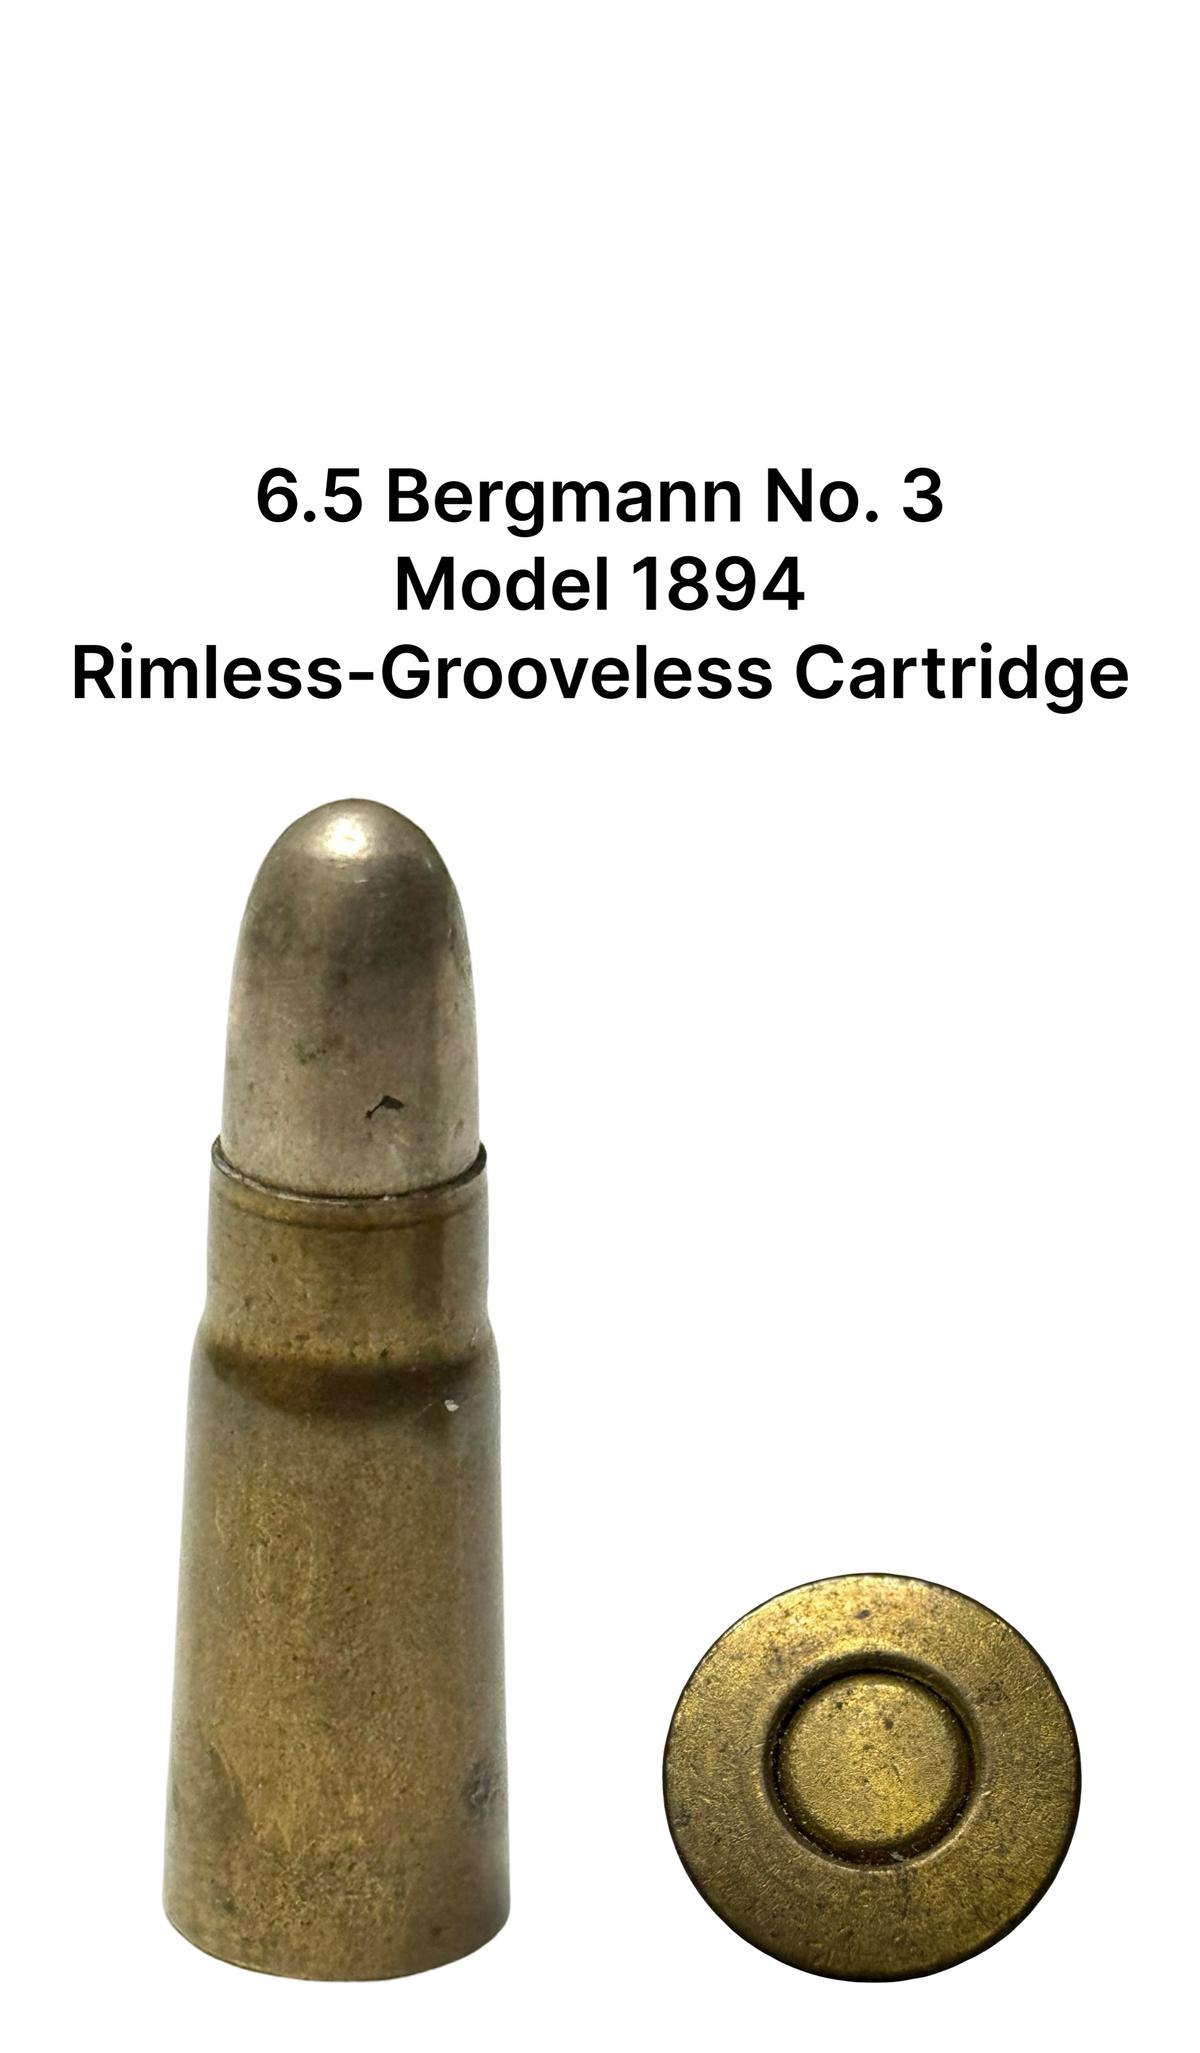 6.5 Bergmann No. 3 Model 1894 Rimless-Grooveless Cartridge